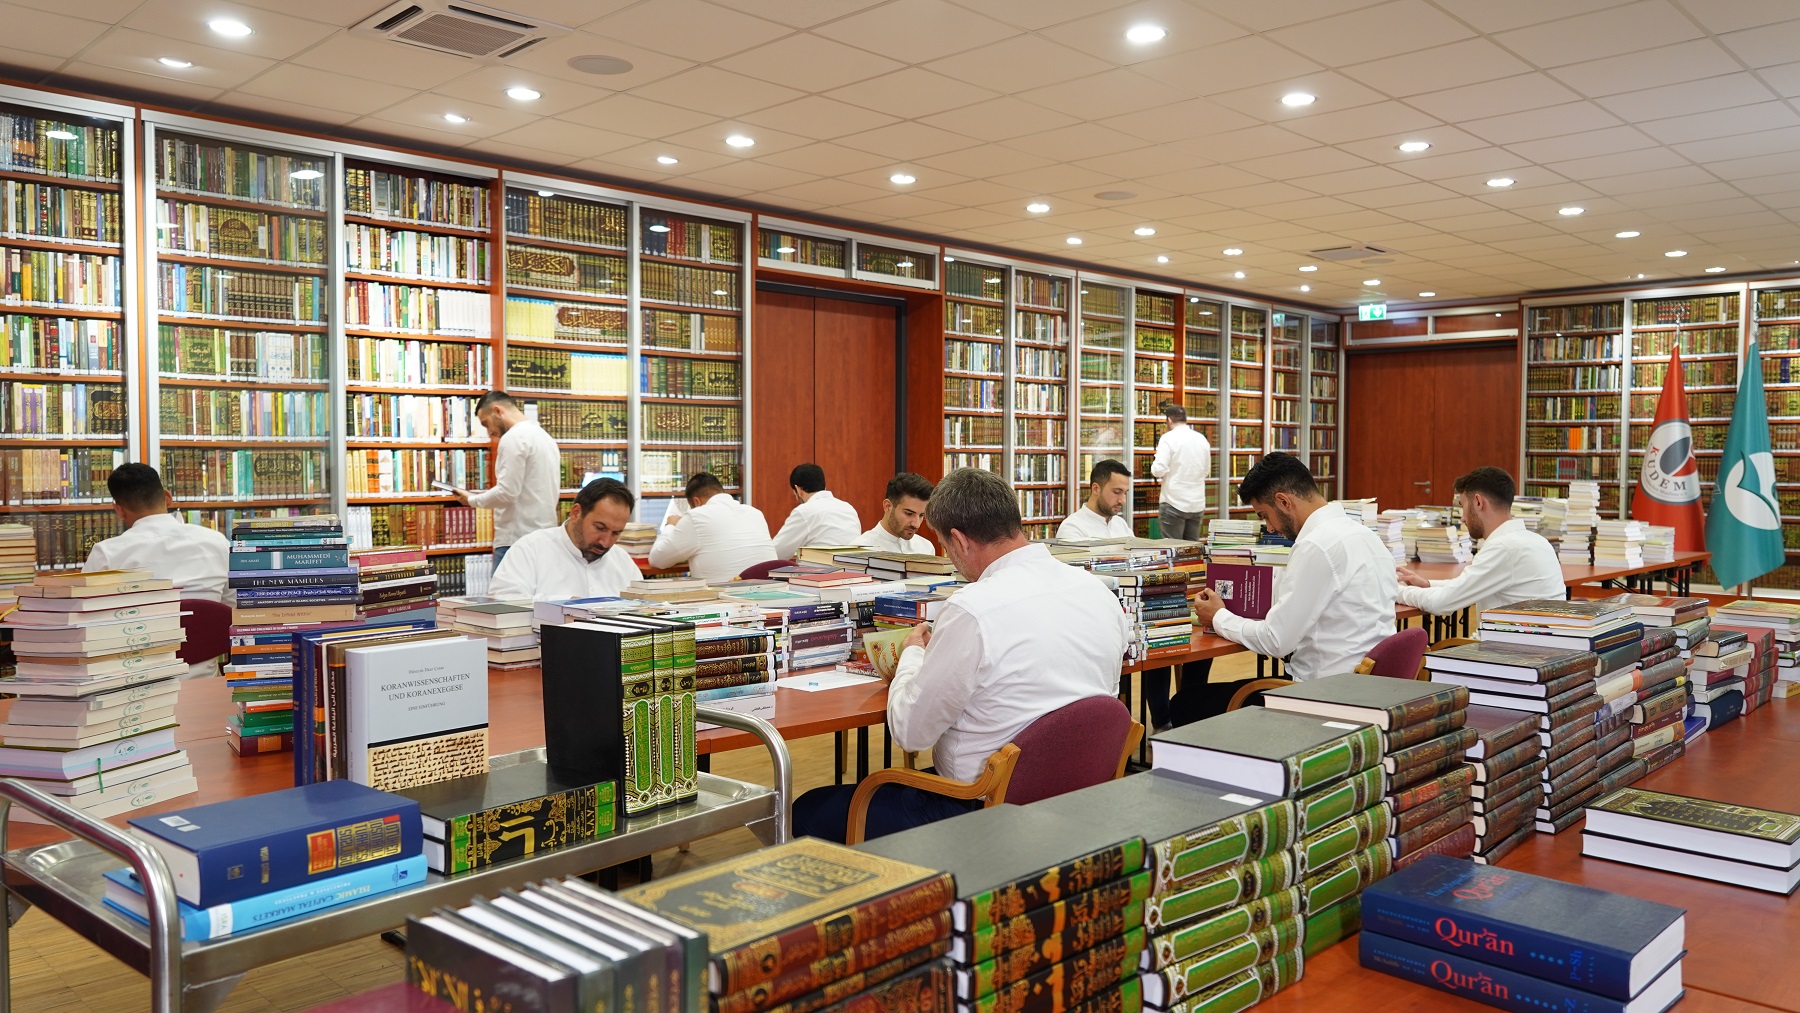 3- IFIS-IZ KUDEM library for Islamic studies 2019